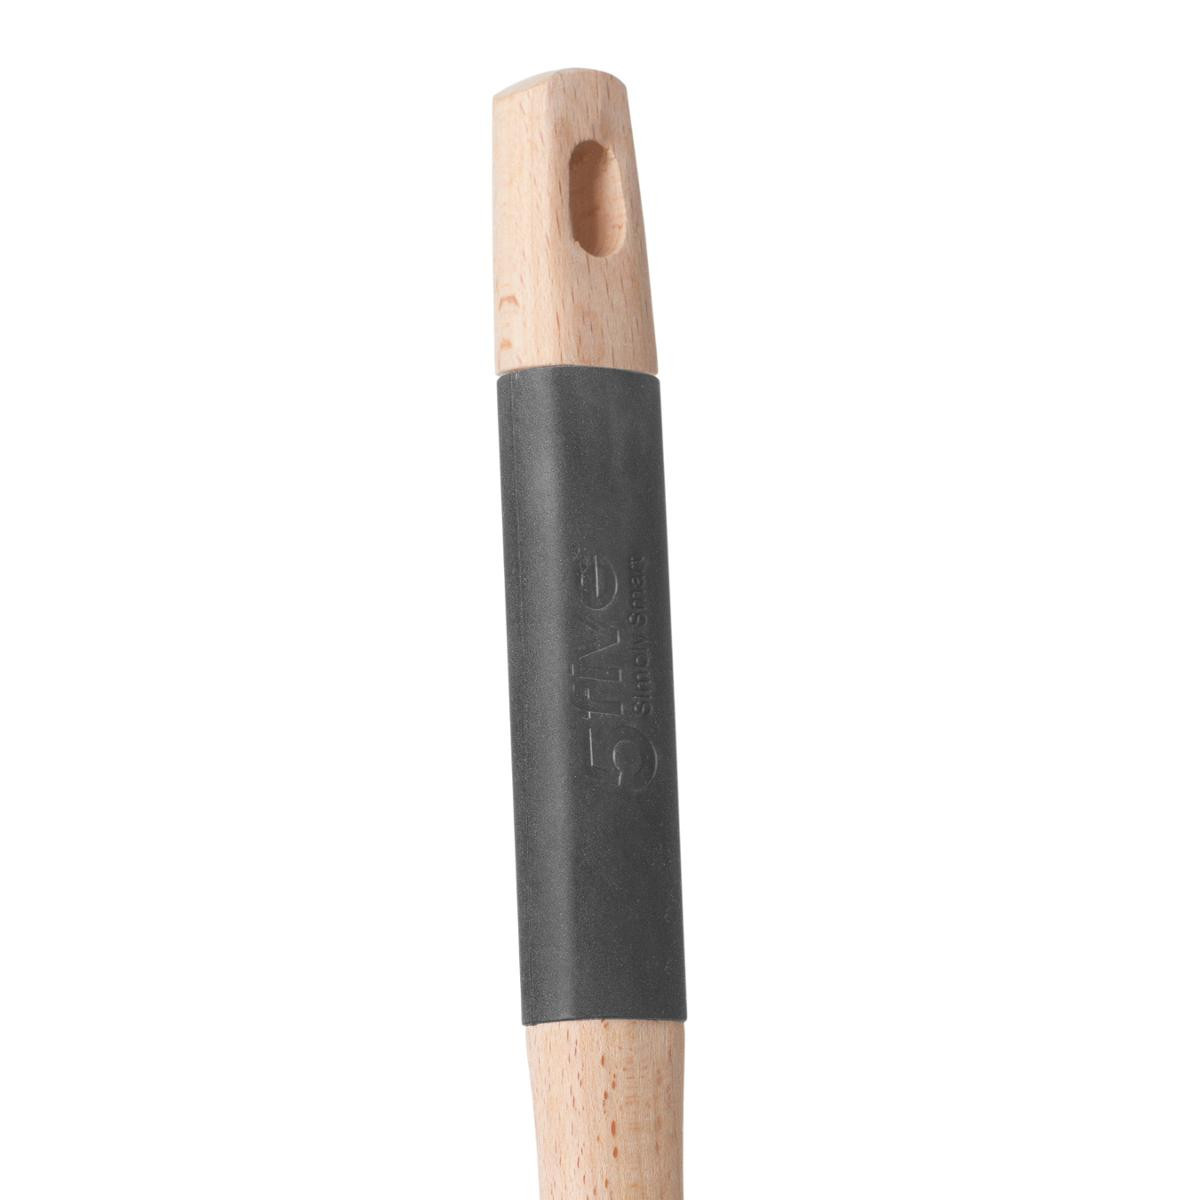 https://www.decomania.fr/617158-product_hd/spatule-a-patisserie-maryse-black-wood.jpg